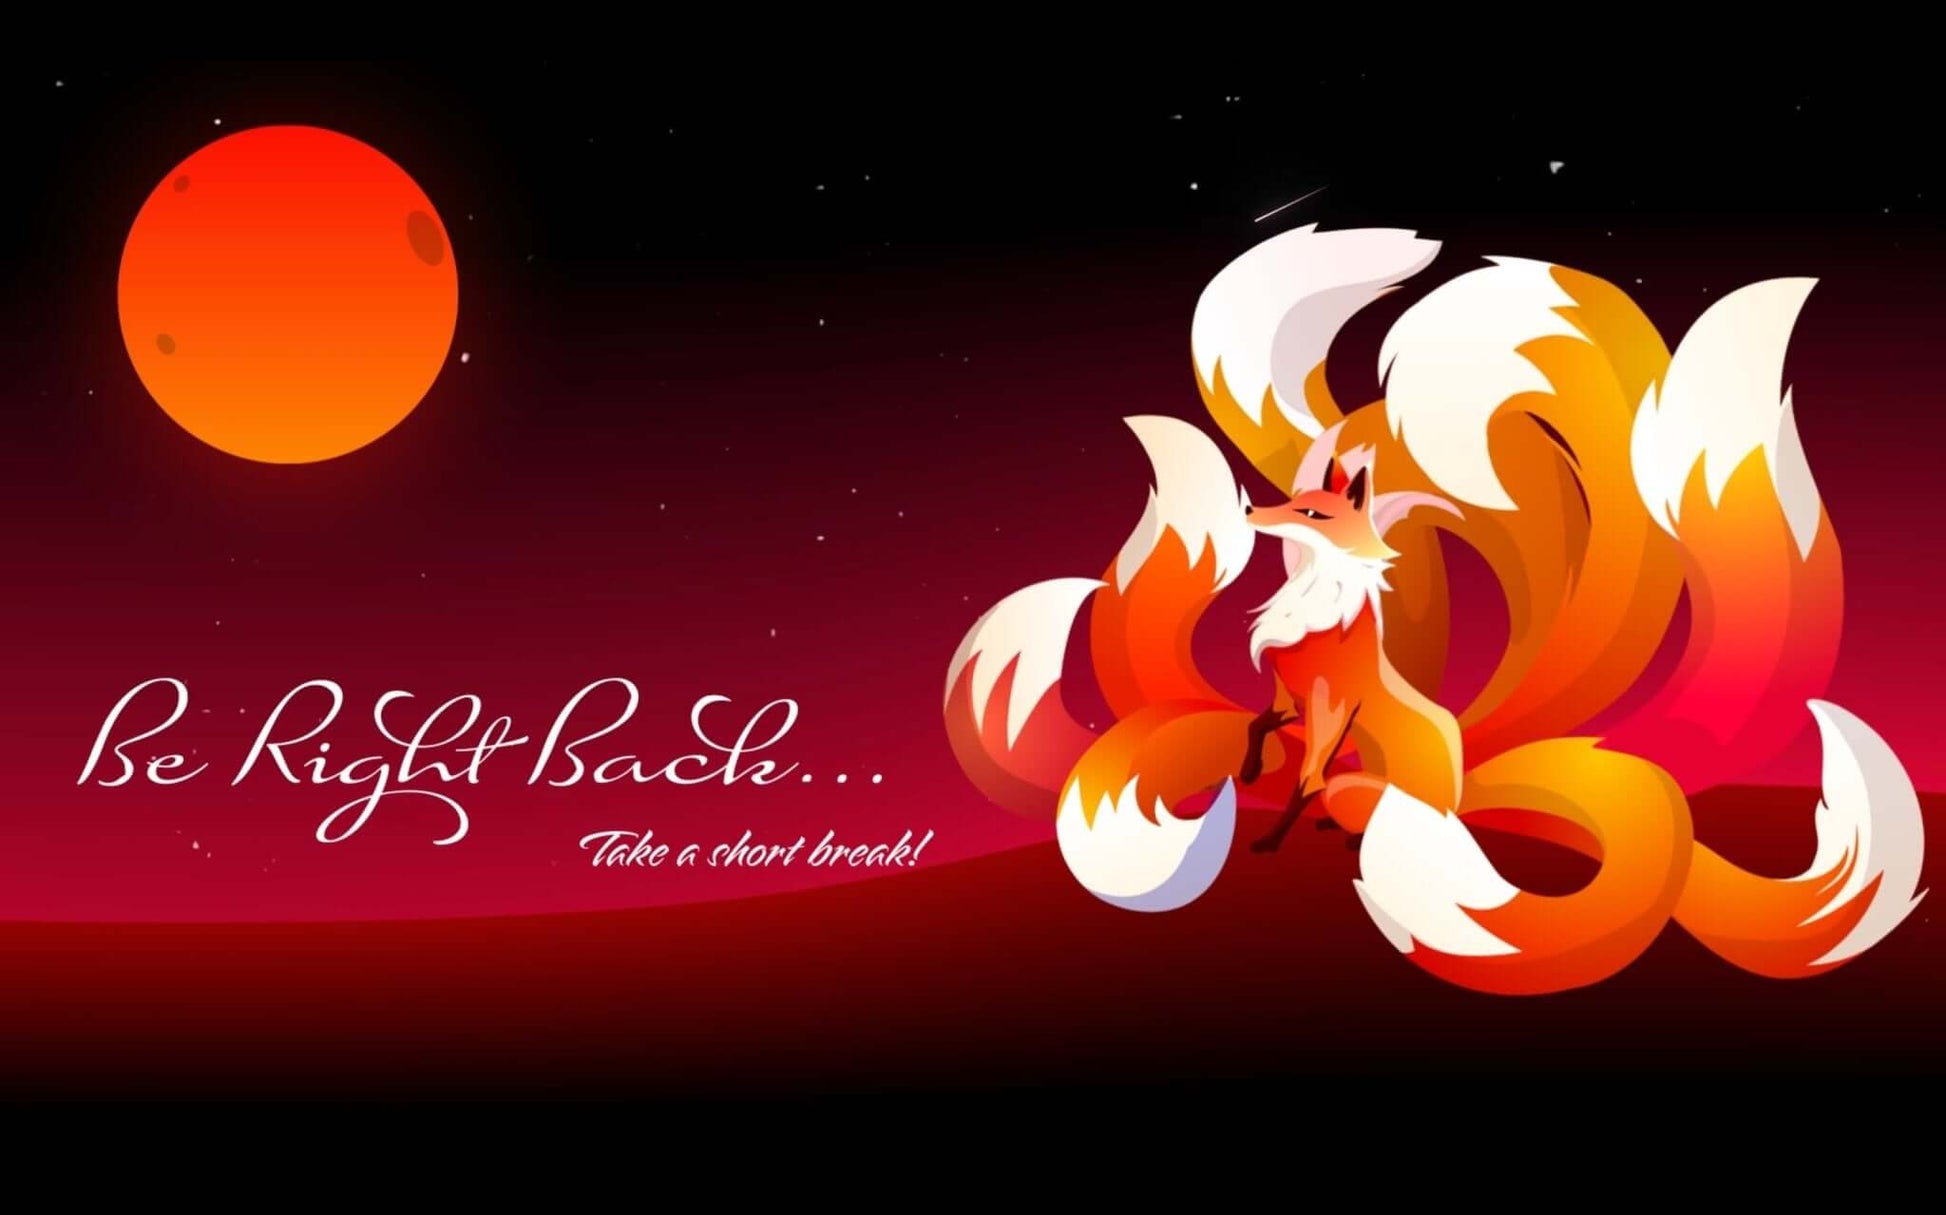 Nine Tail Fox Kitsune Animated Stream Screen Overlays - Overlay - Stream K-Arts